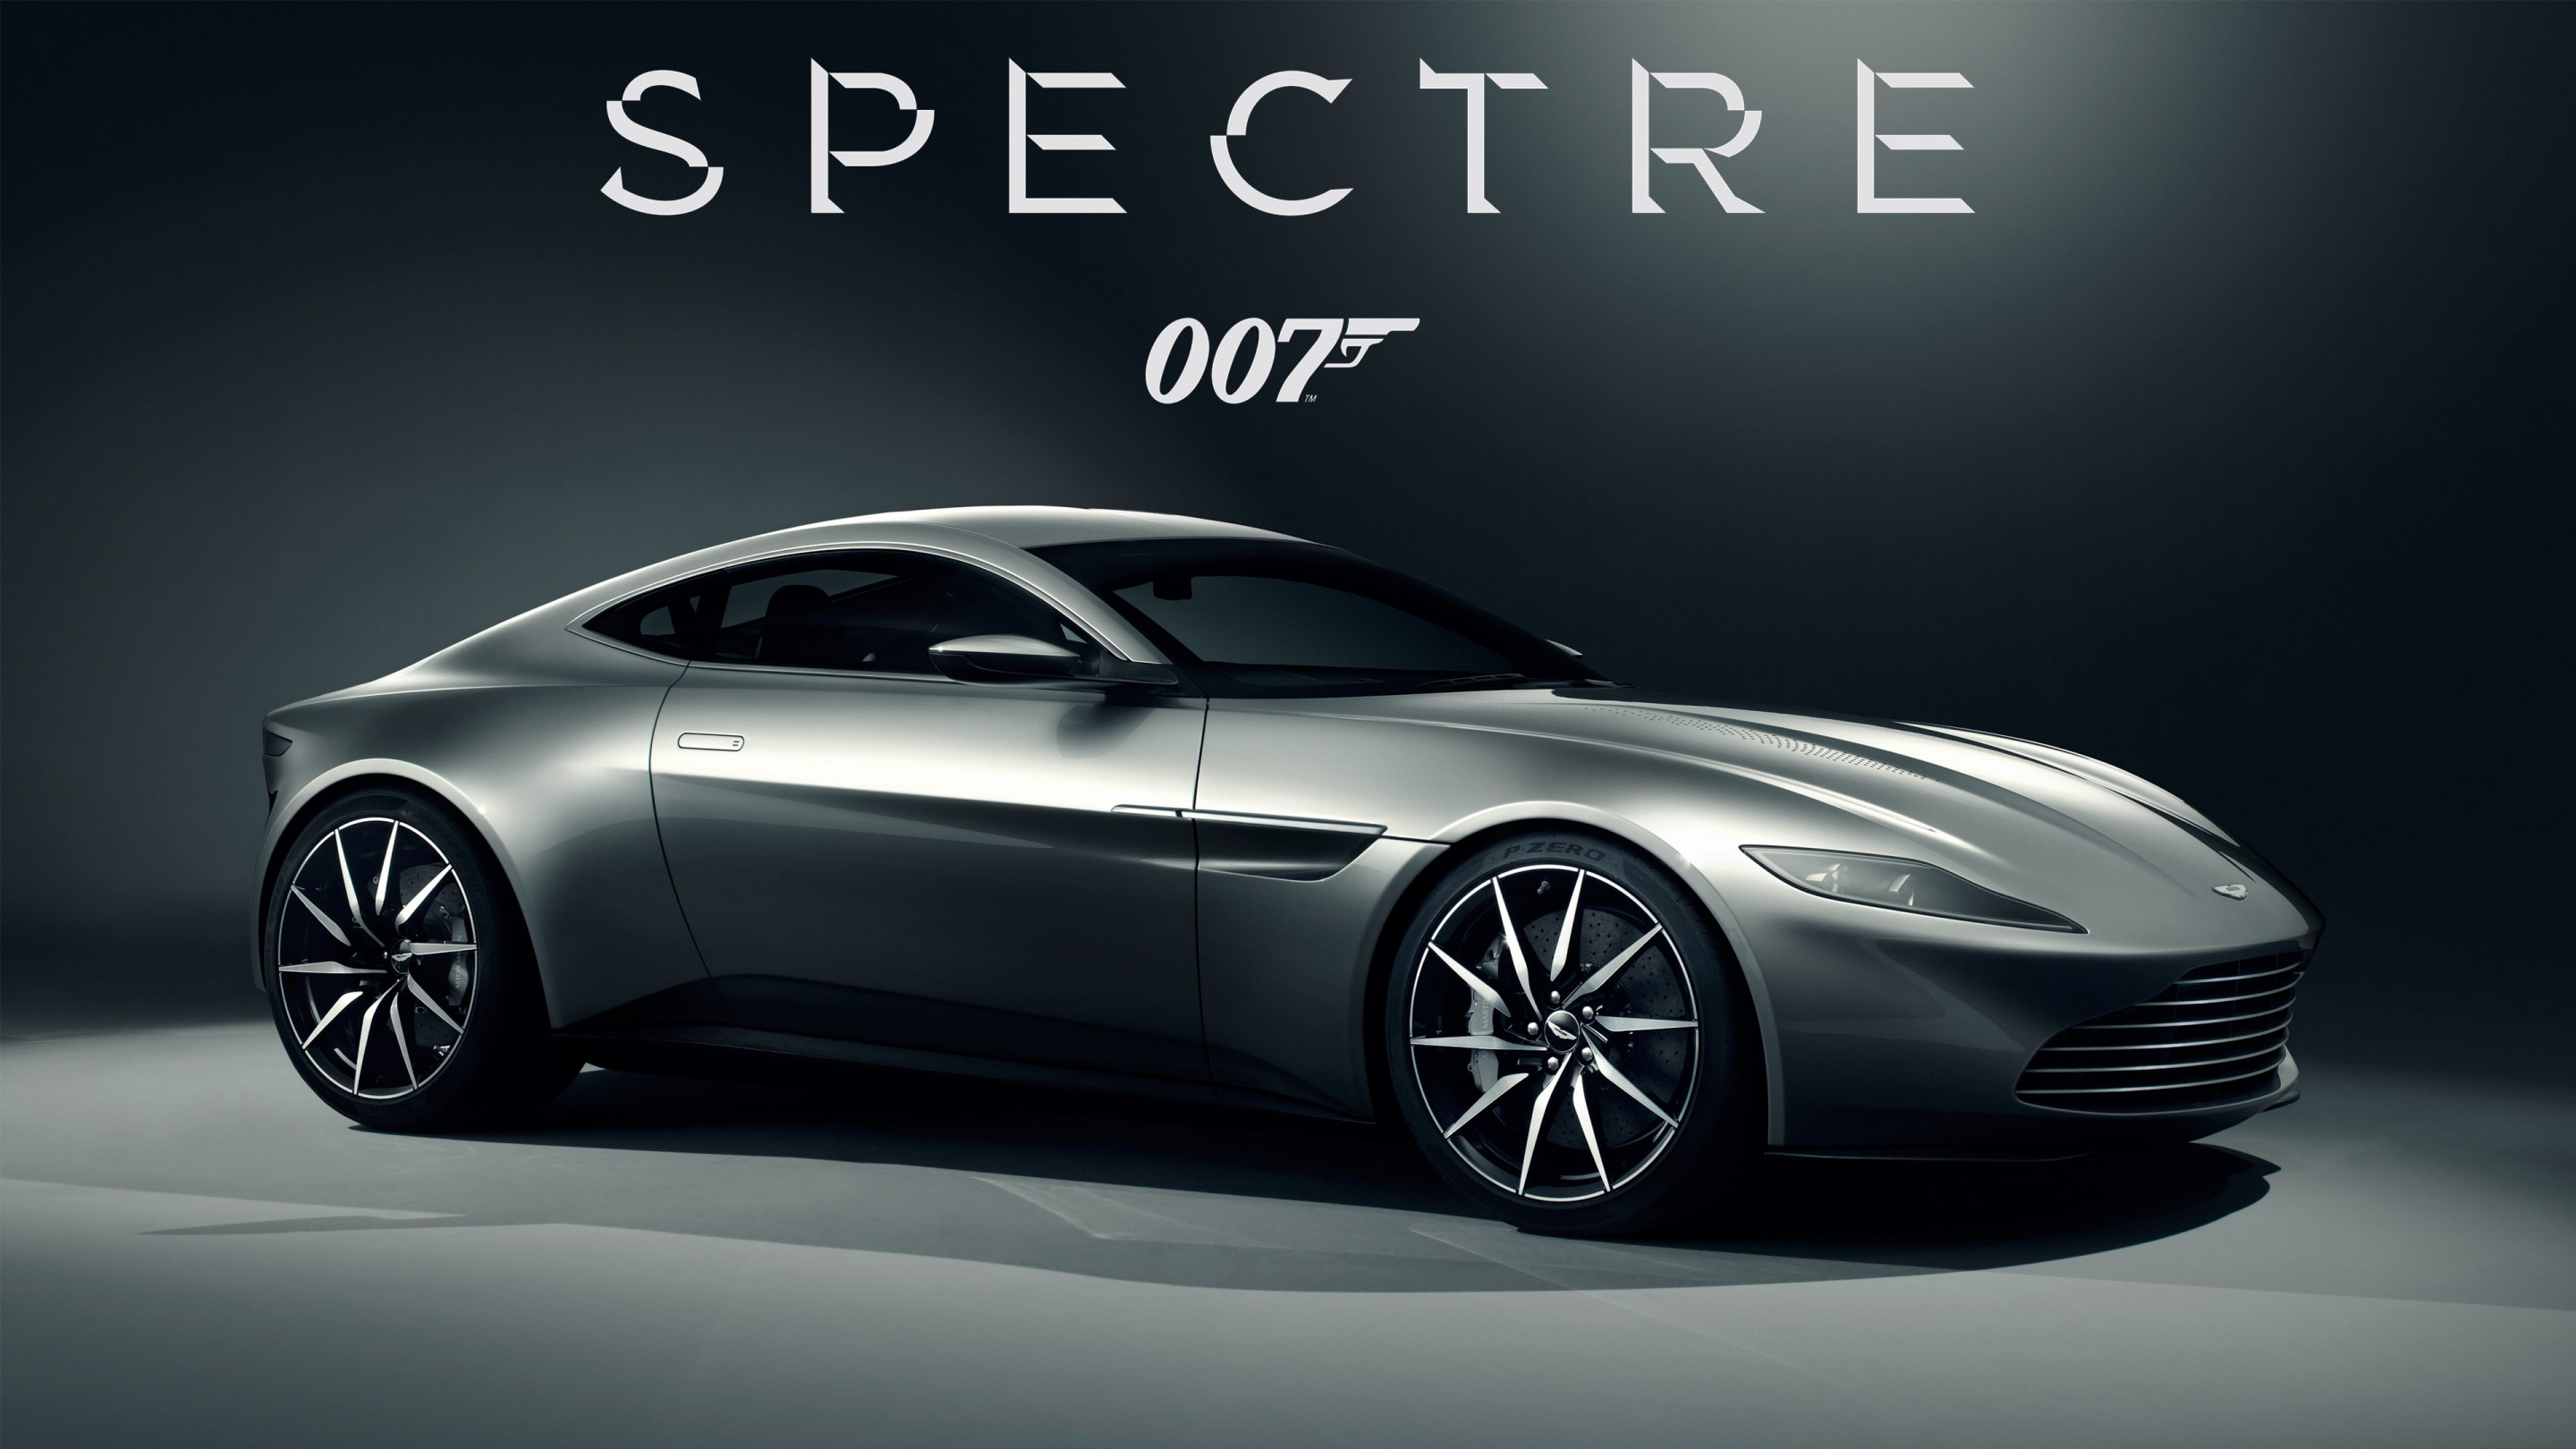 Aston Martin DB10 007 Spectre car wallpaper 2880x1620